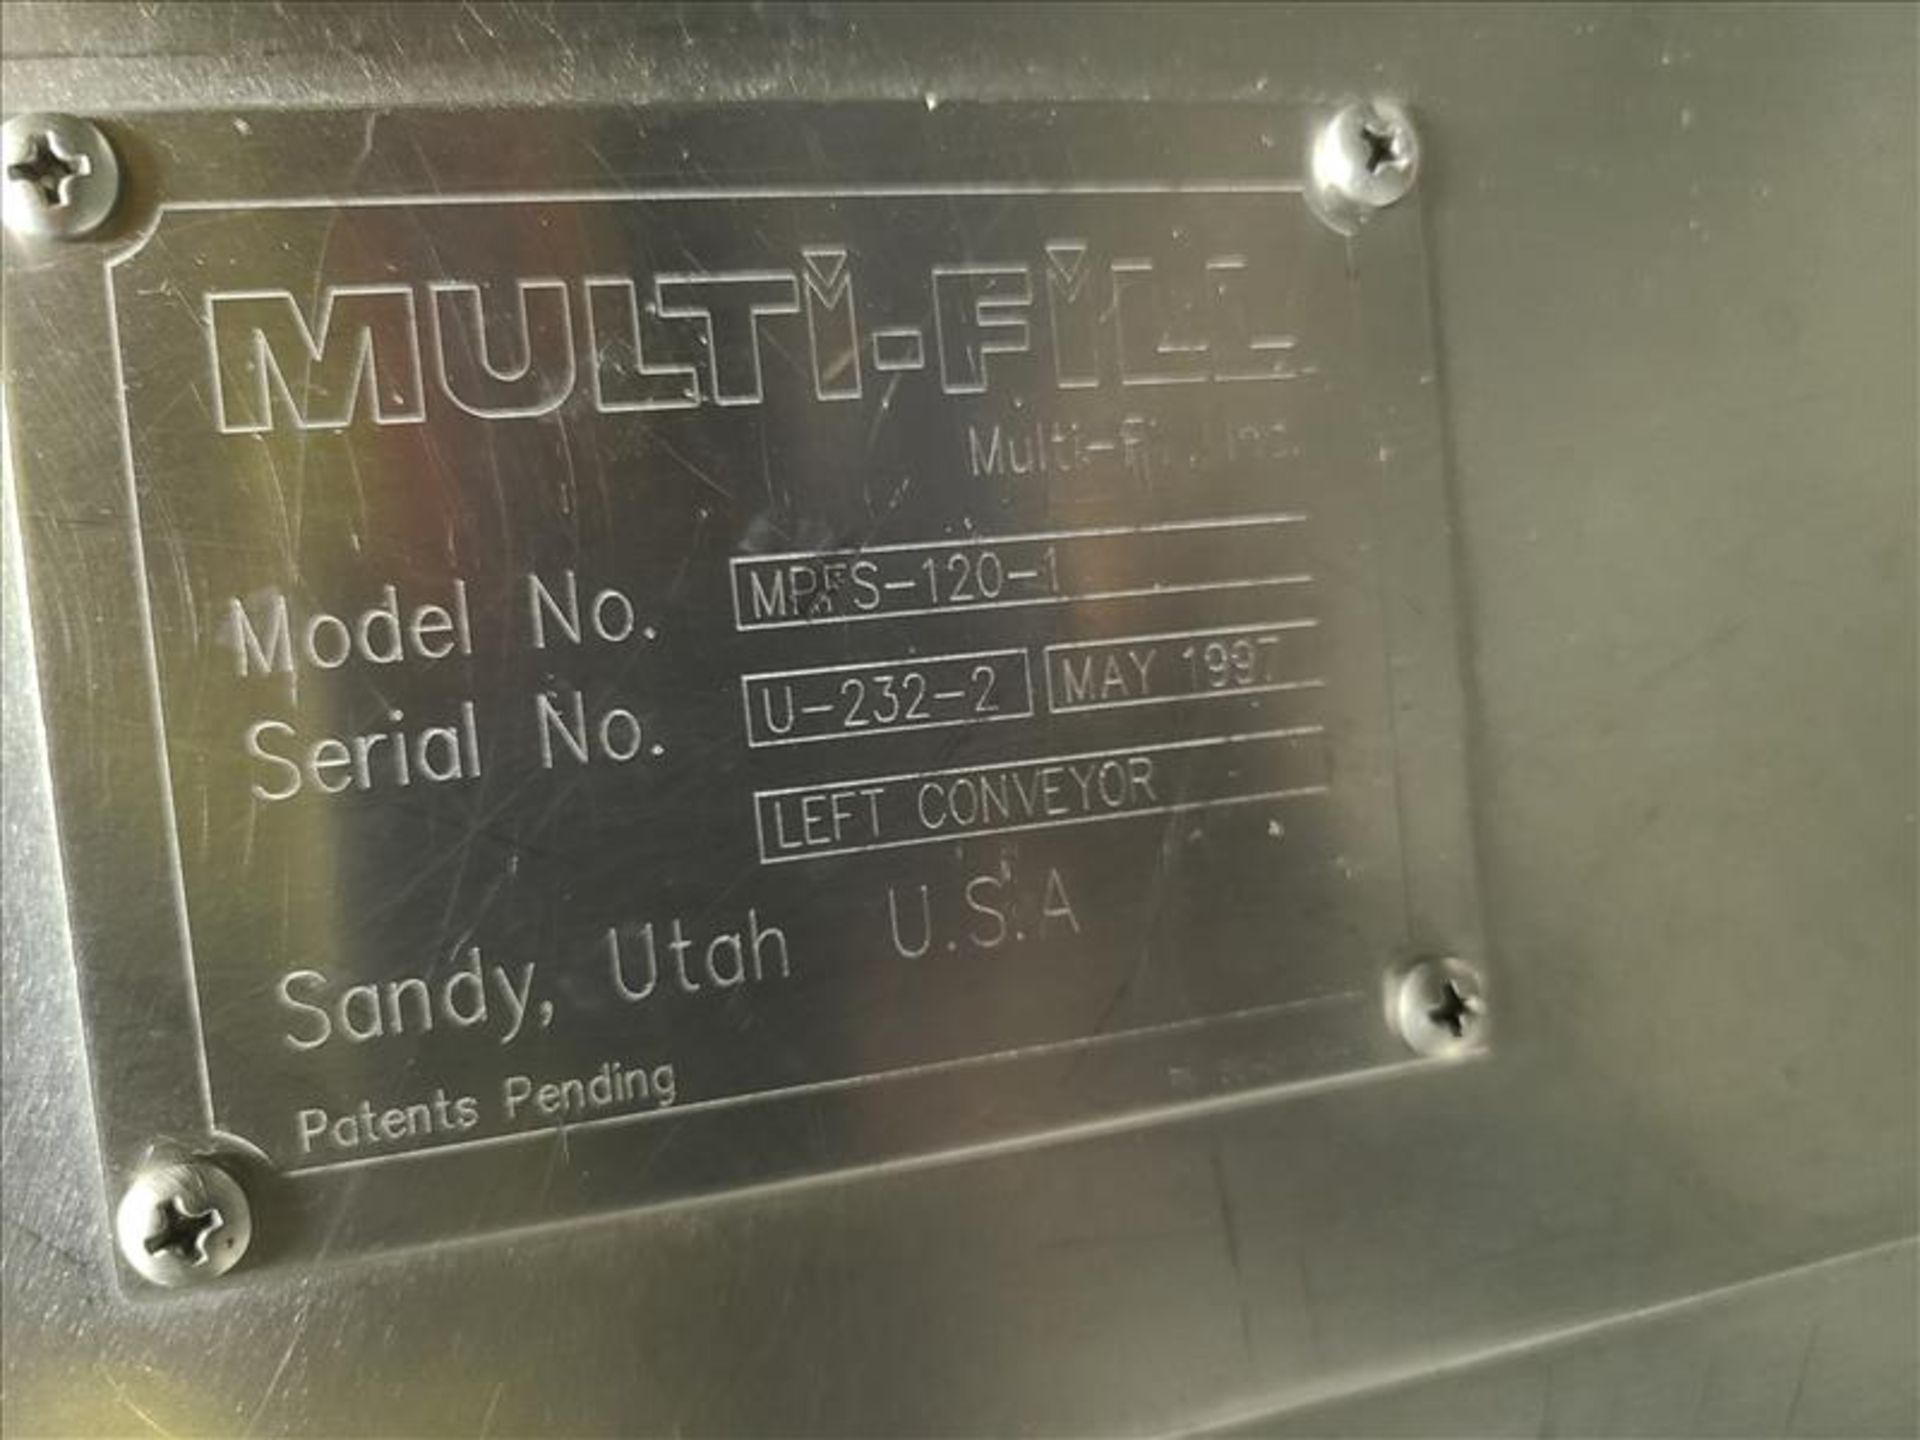 MultiFill Volumetric Filler Conveyor, model MPFS-120-1, S/N U-232-2 (Spare parts) - Image 3 of 3